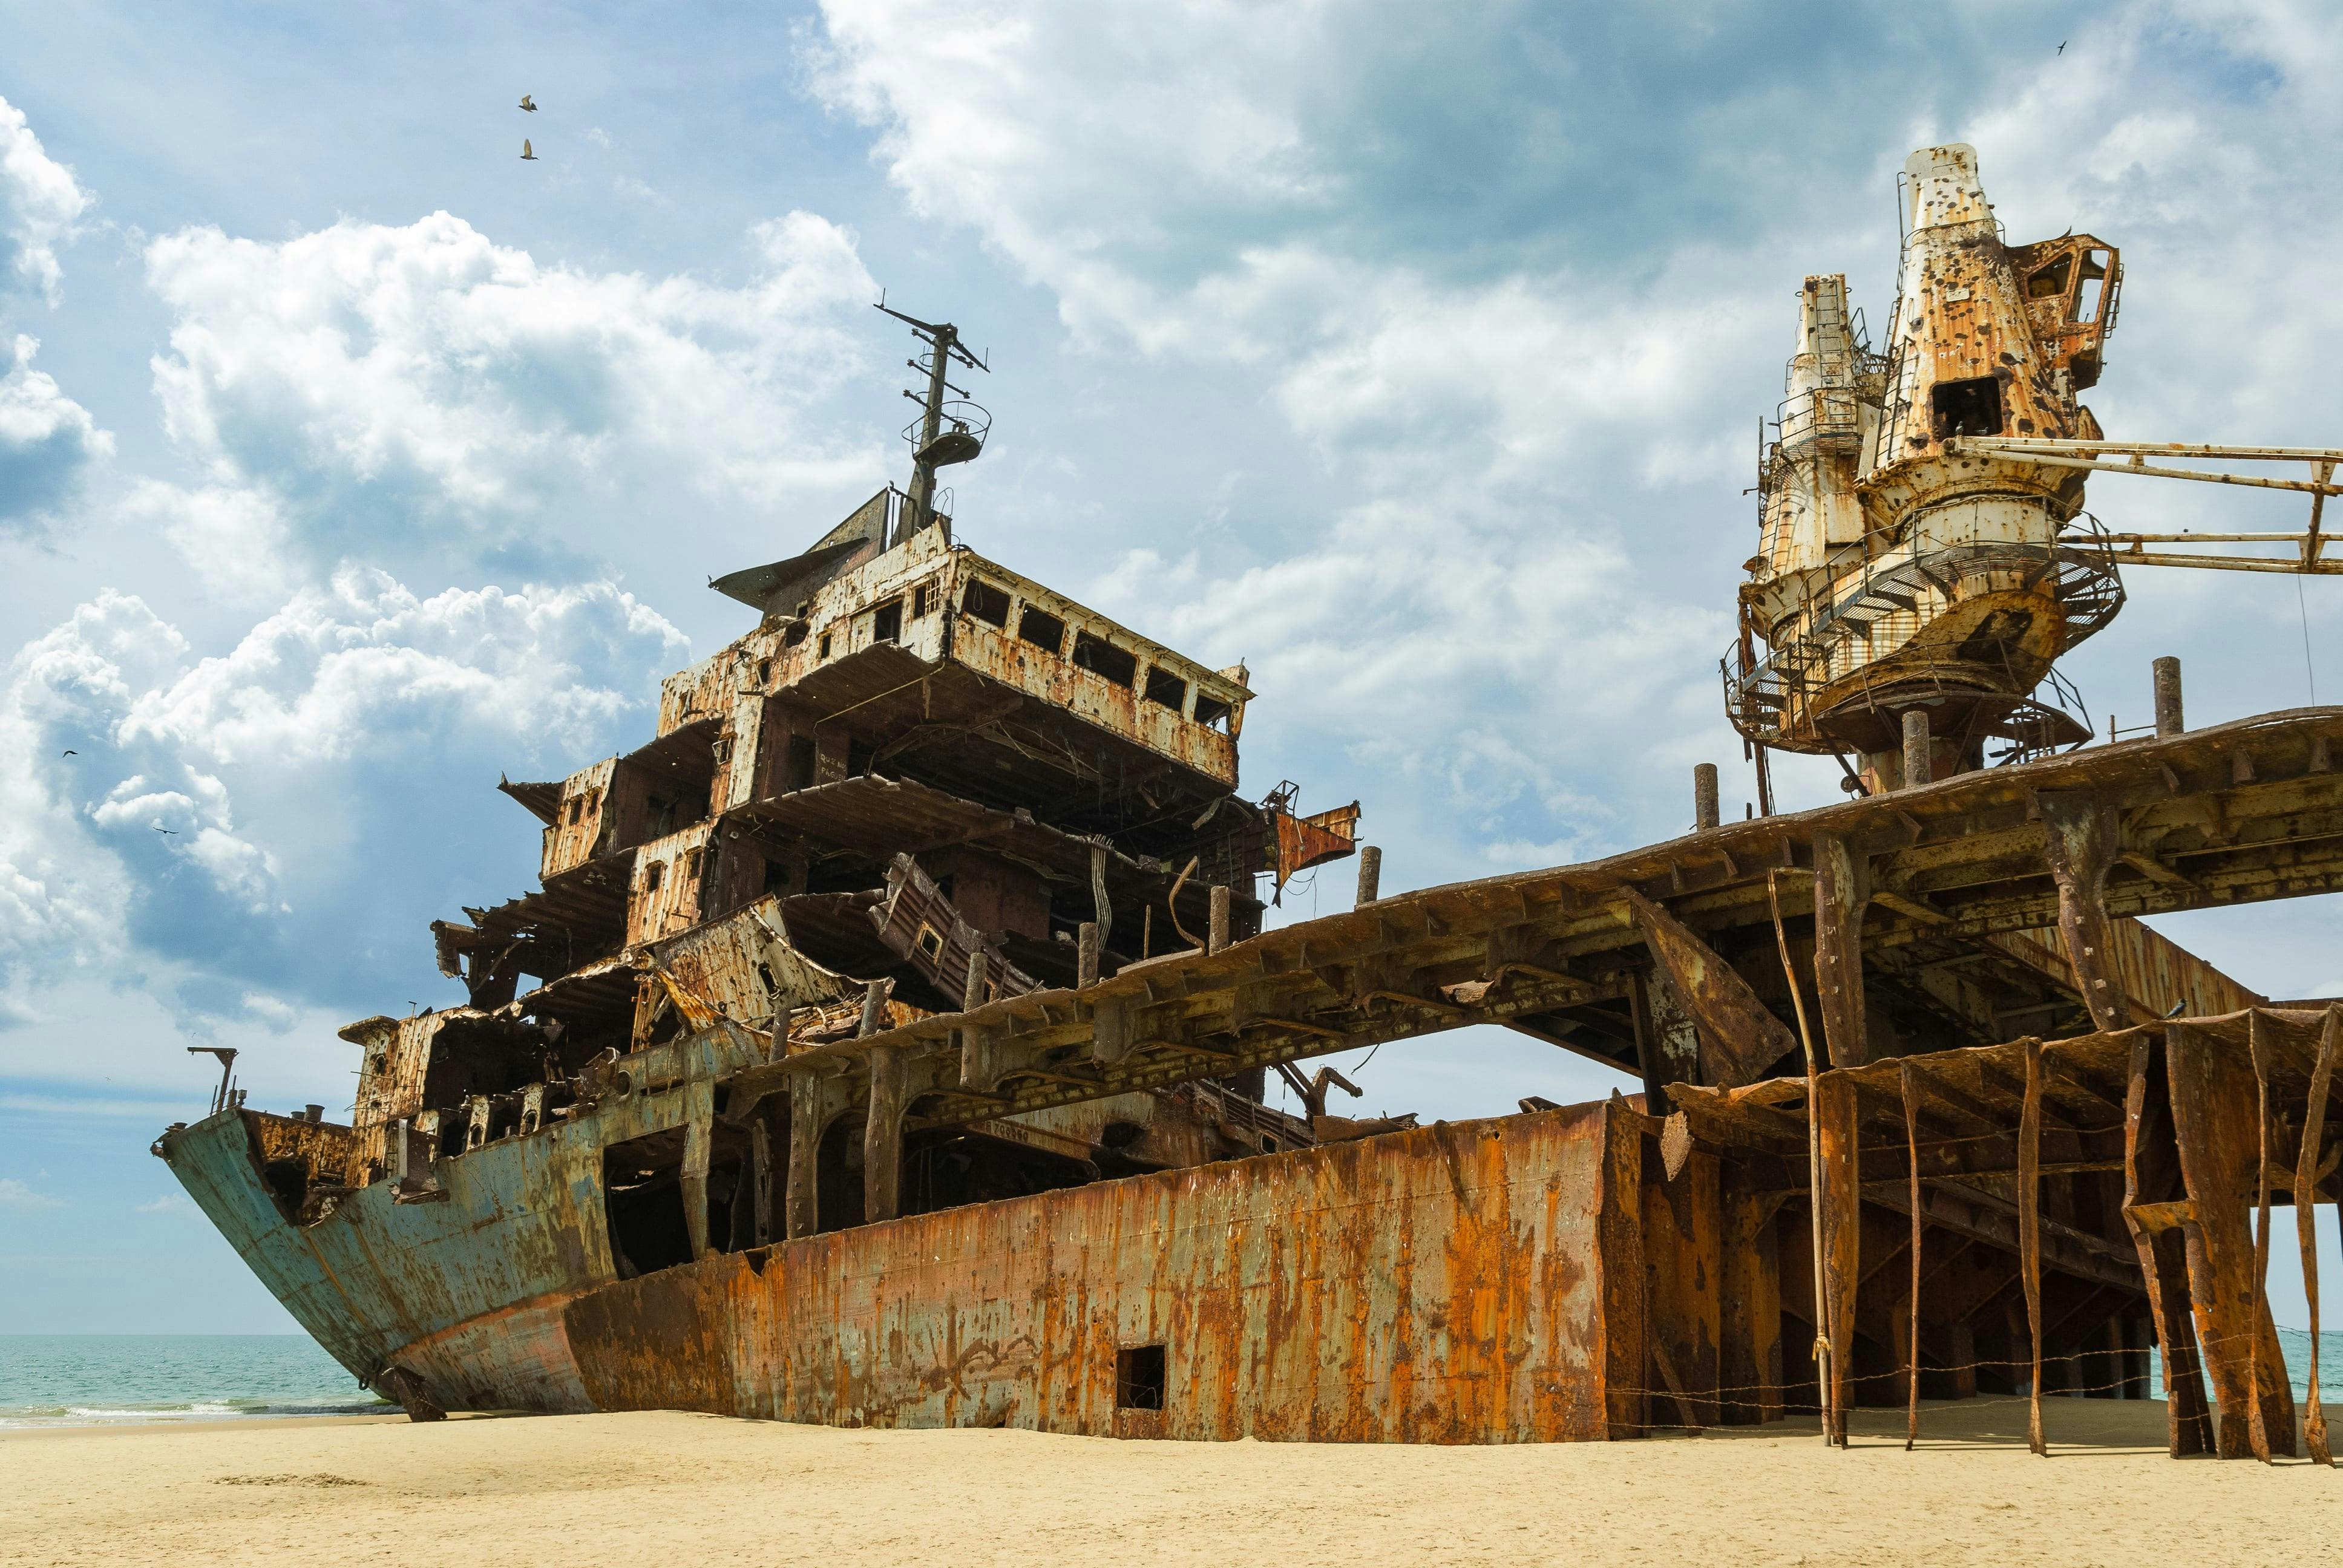 Shipwreck stranded on the coast in the northeast of Sri Lanka